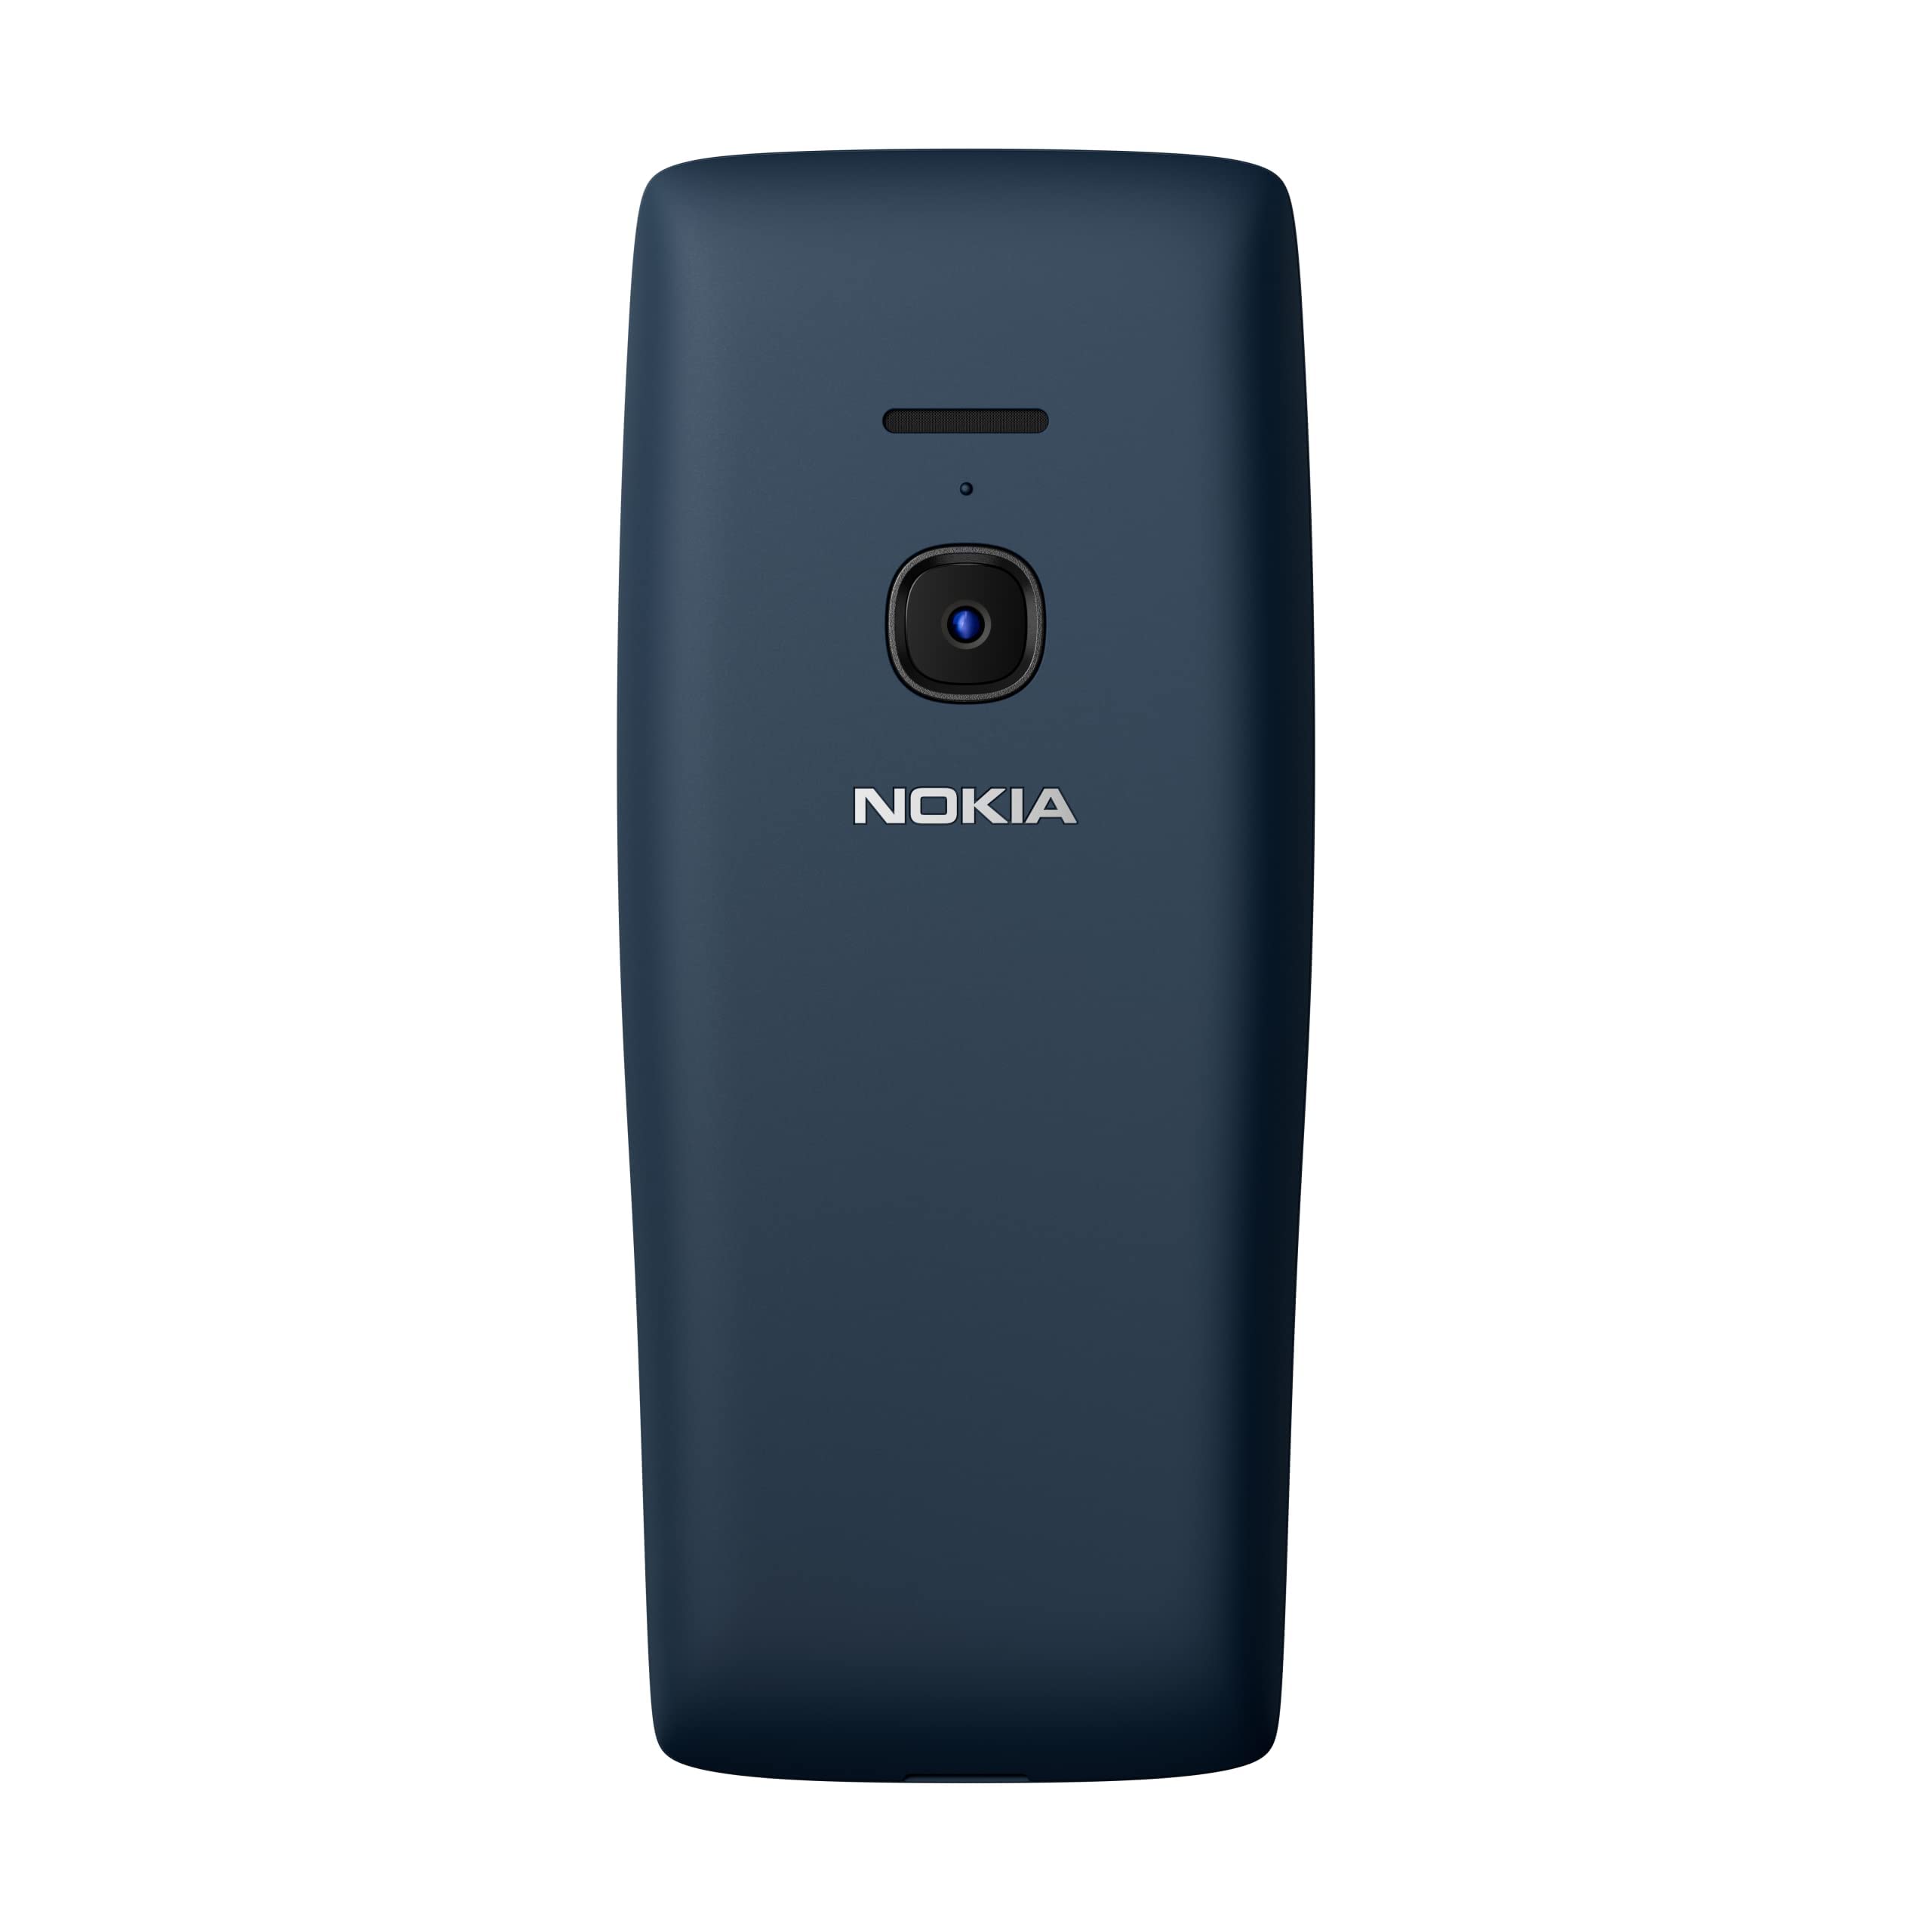 Nokia 8210 4G Dual-SIM 128MB ROM + 48MB RAM (GSM Only | No CDMA) Factory Unlocked 4G/LTE Smartphone (Dark Black) - International Version